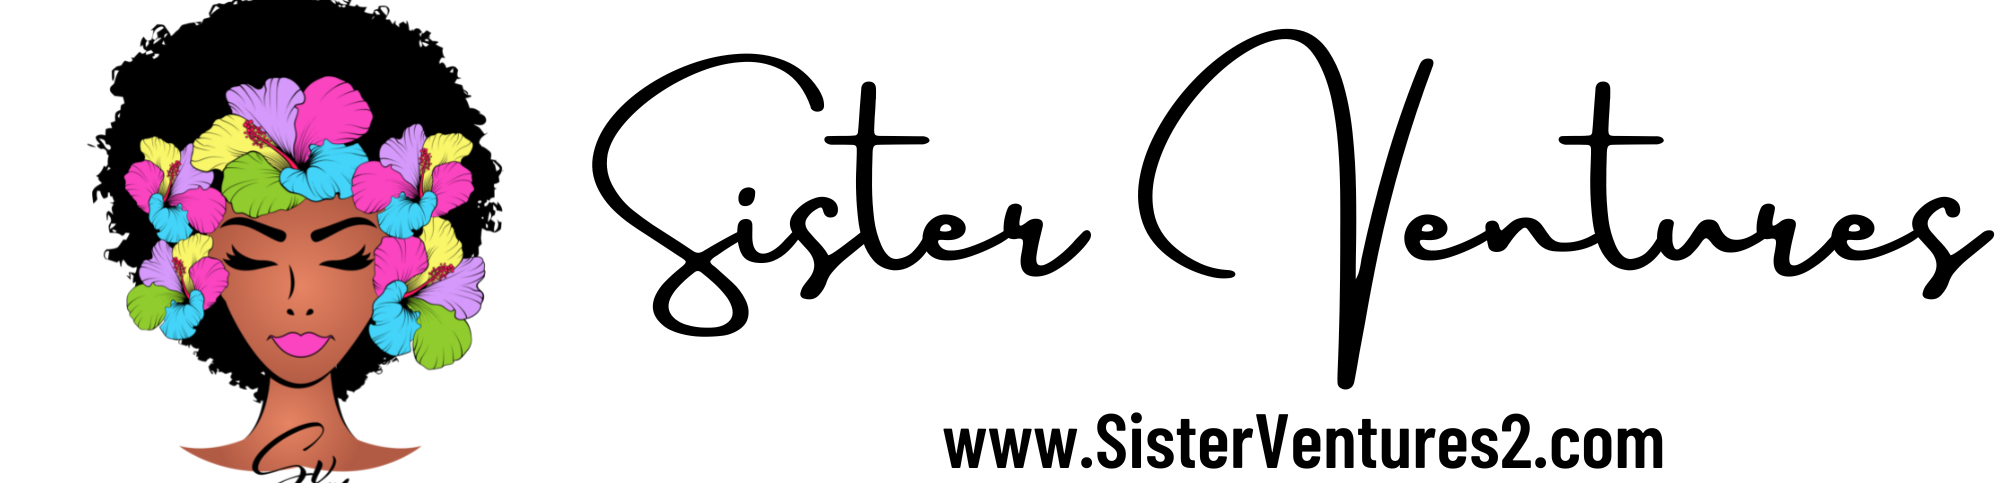 Sister Ventures